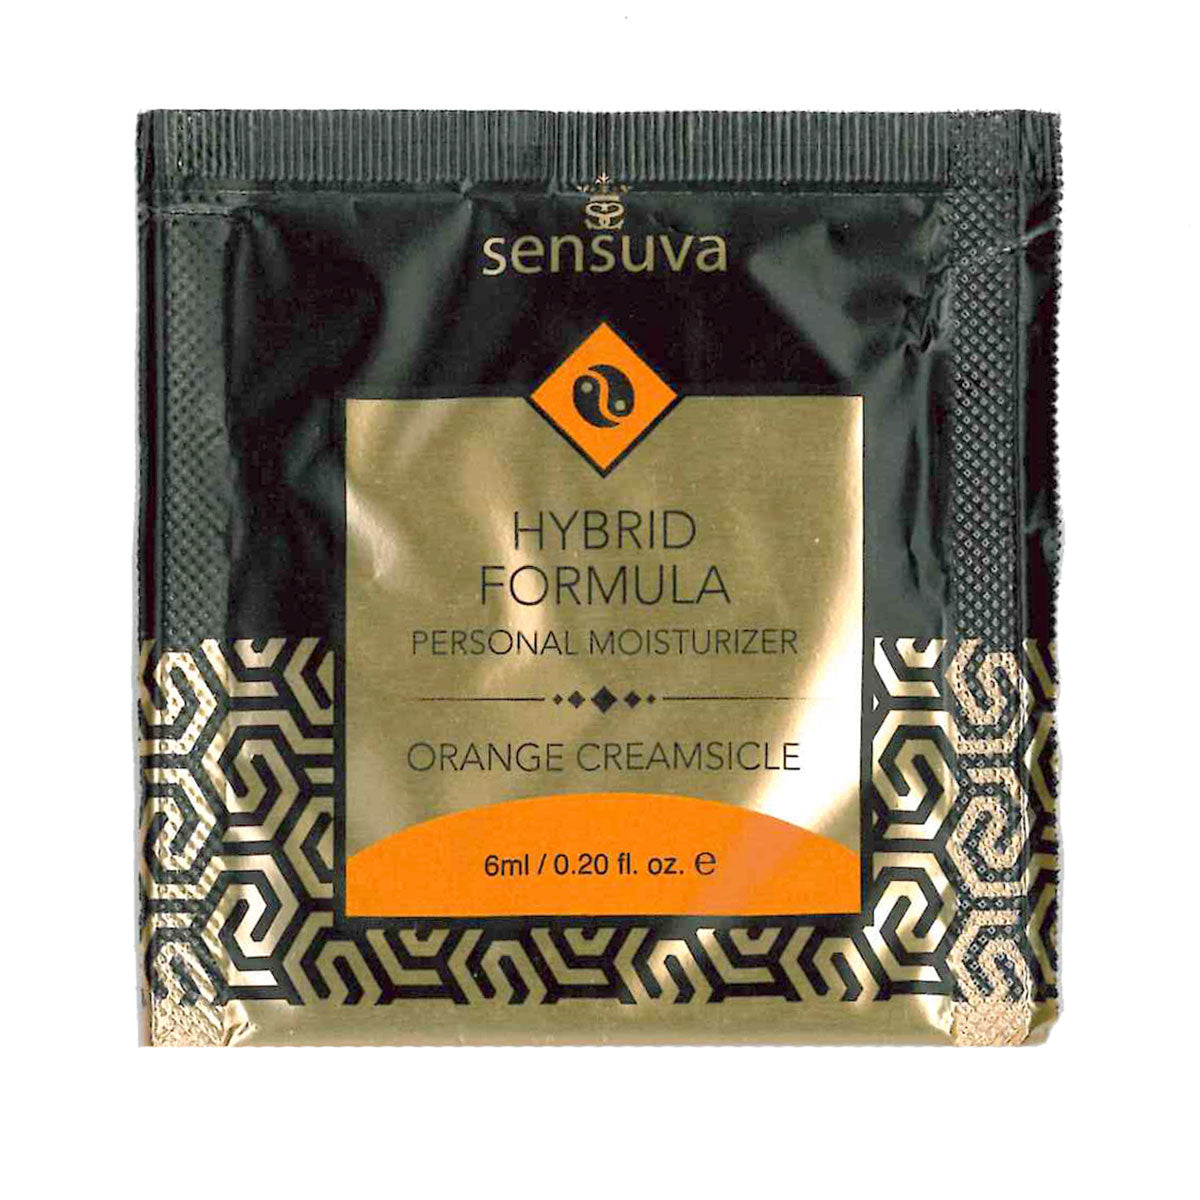 Sensuva – Hybrid Formula Personal Moisturizer - Orange Creamsicle - Foil 6ml/0.20 fl oz.